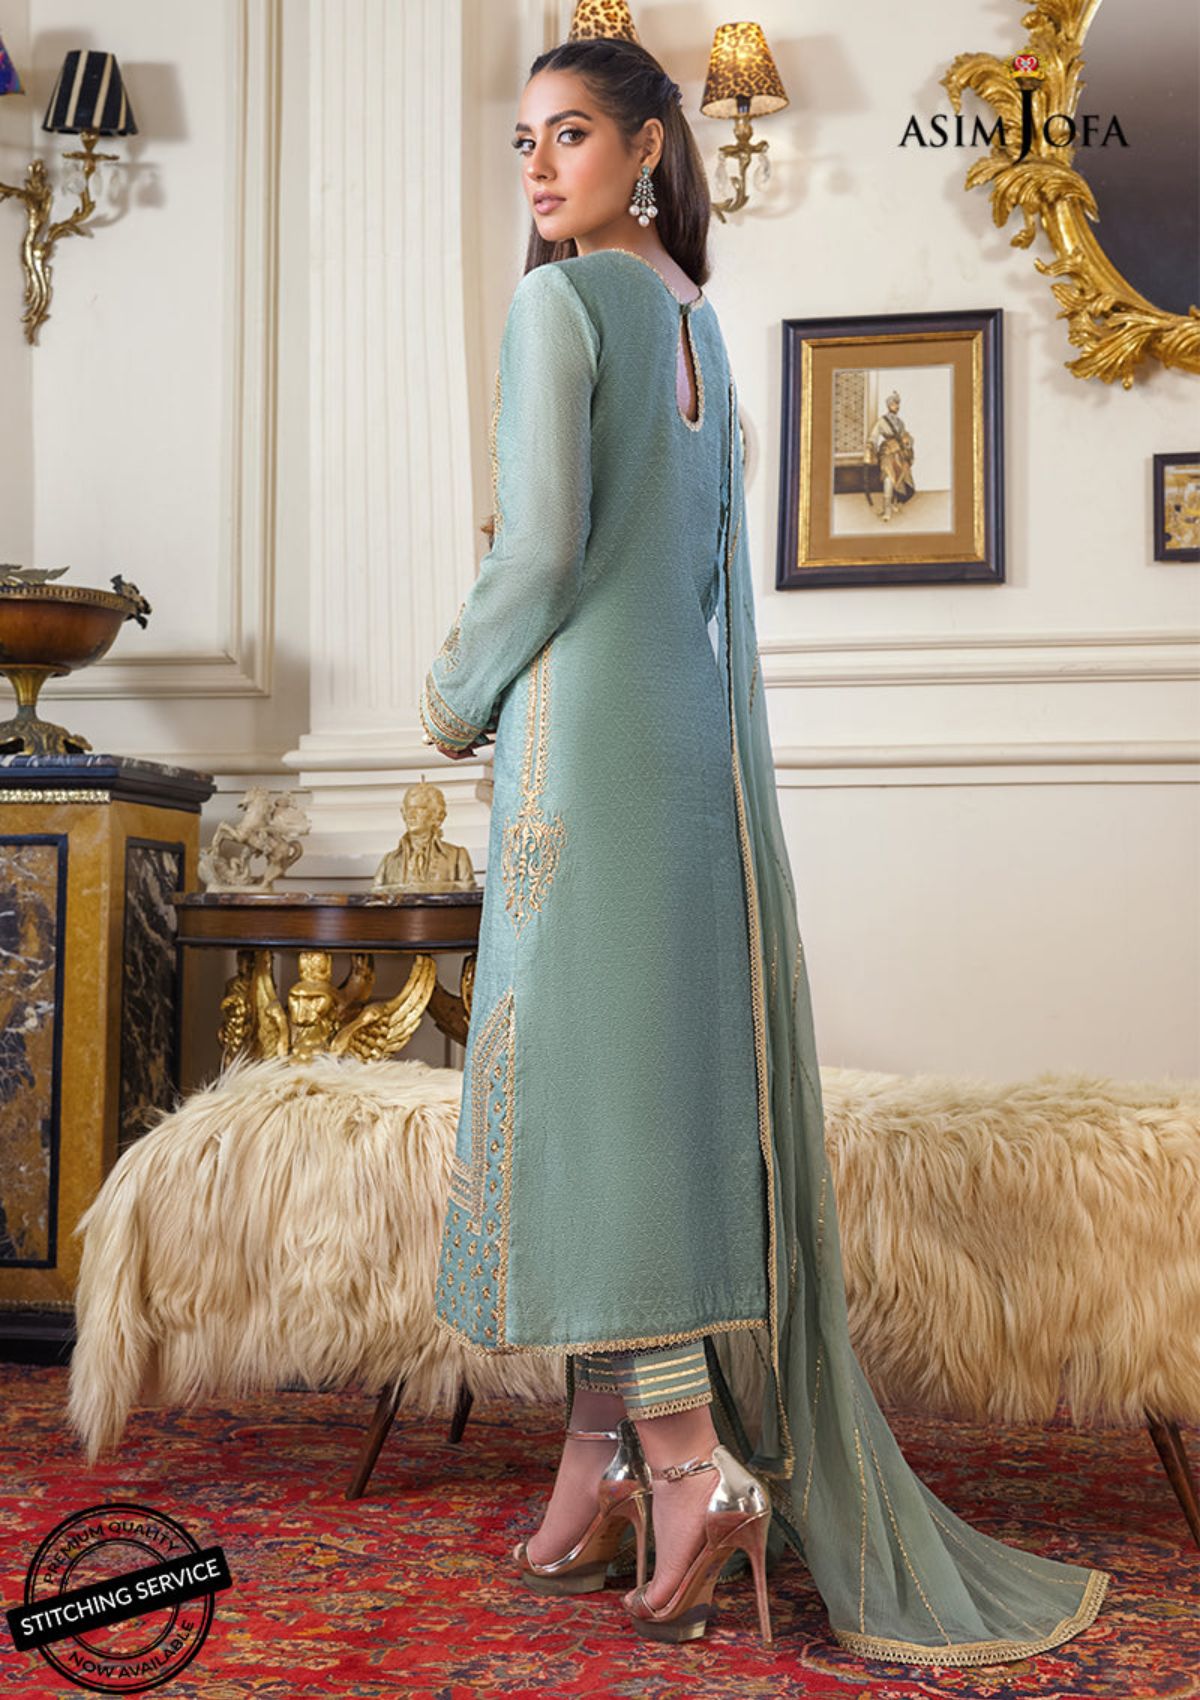 Winter Collection - Asim Jofa - Iqra & Minal - AJIM#21 available at Saleem Fabrics Traditions